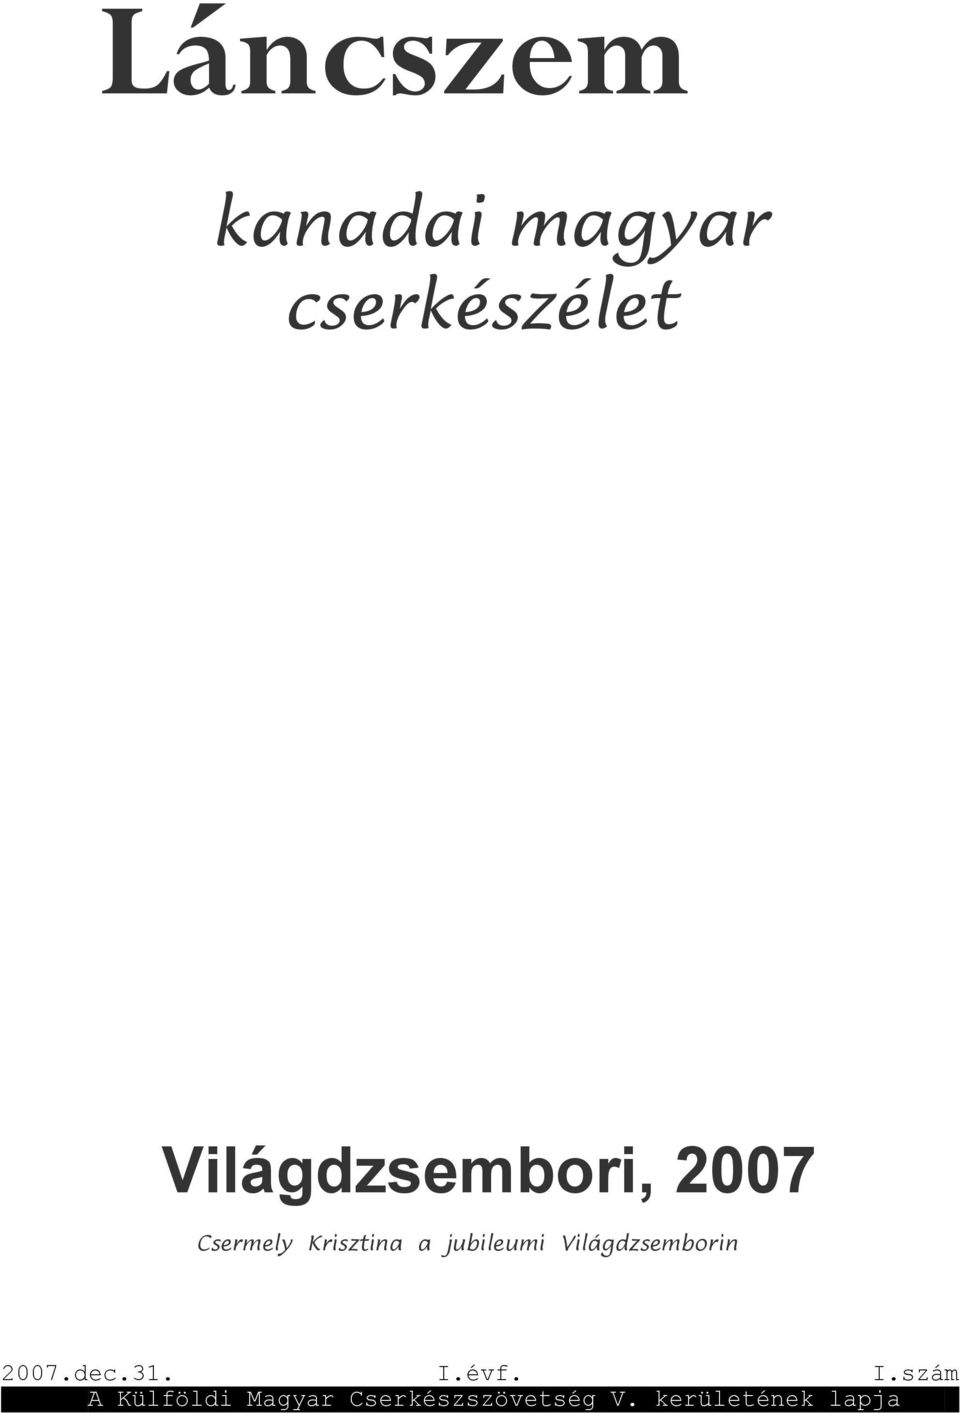 jubileumi Világdzsemborin 2007.dec.31. I.